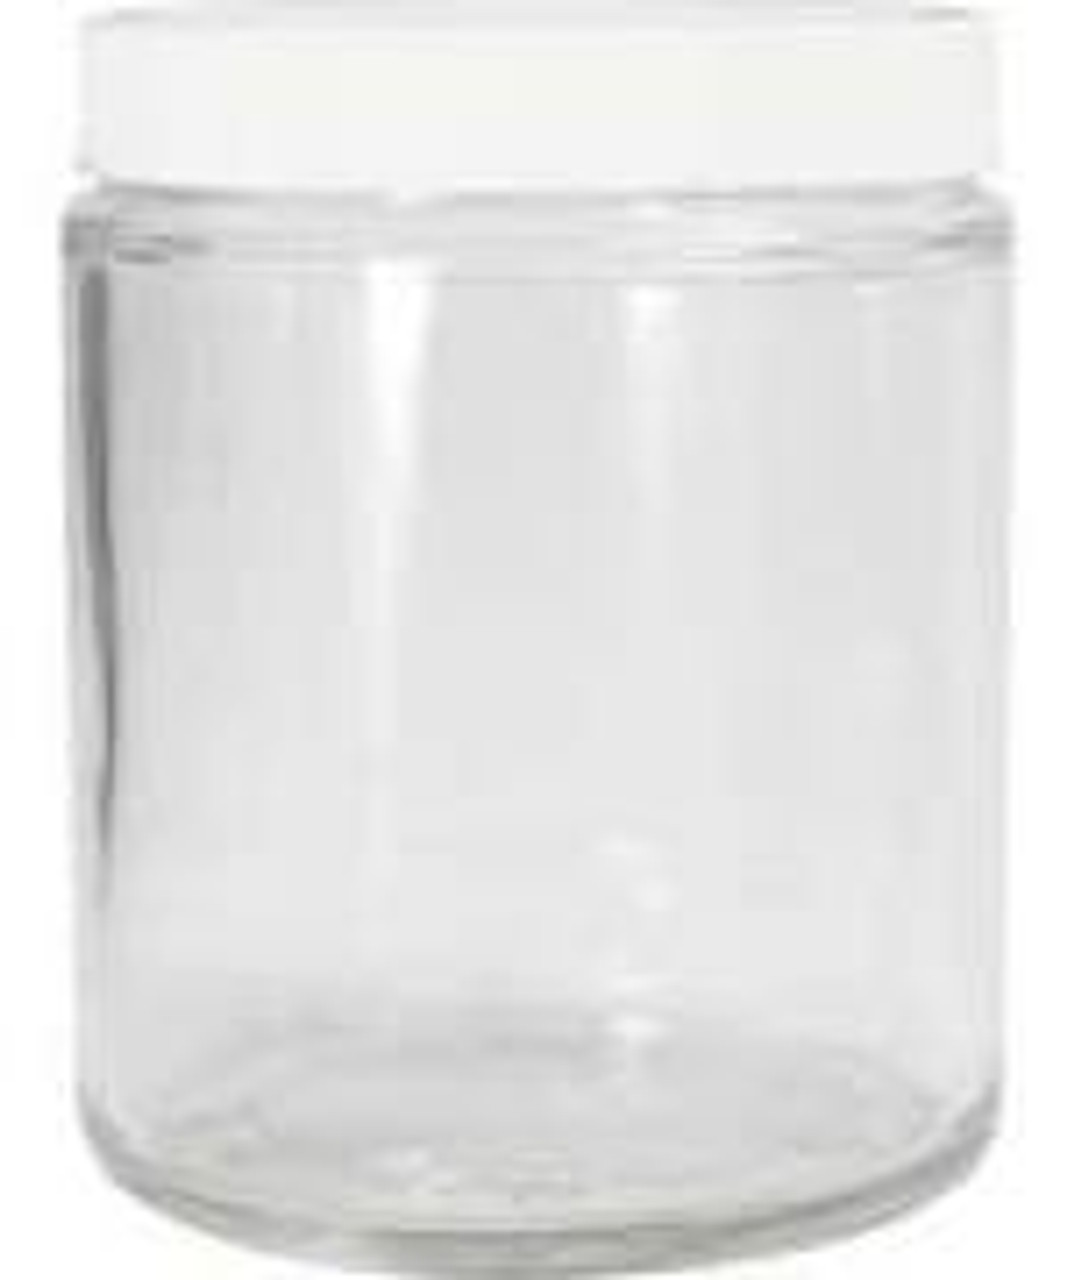 8oz Amber Glass Straight Sided Jars